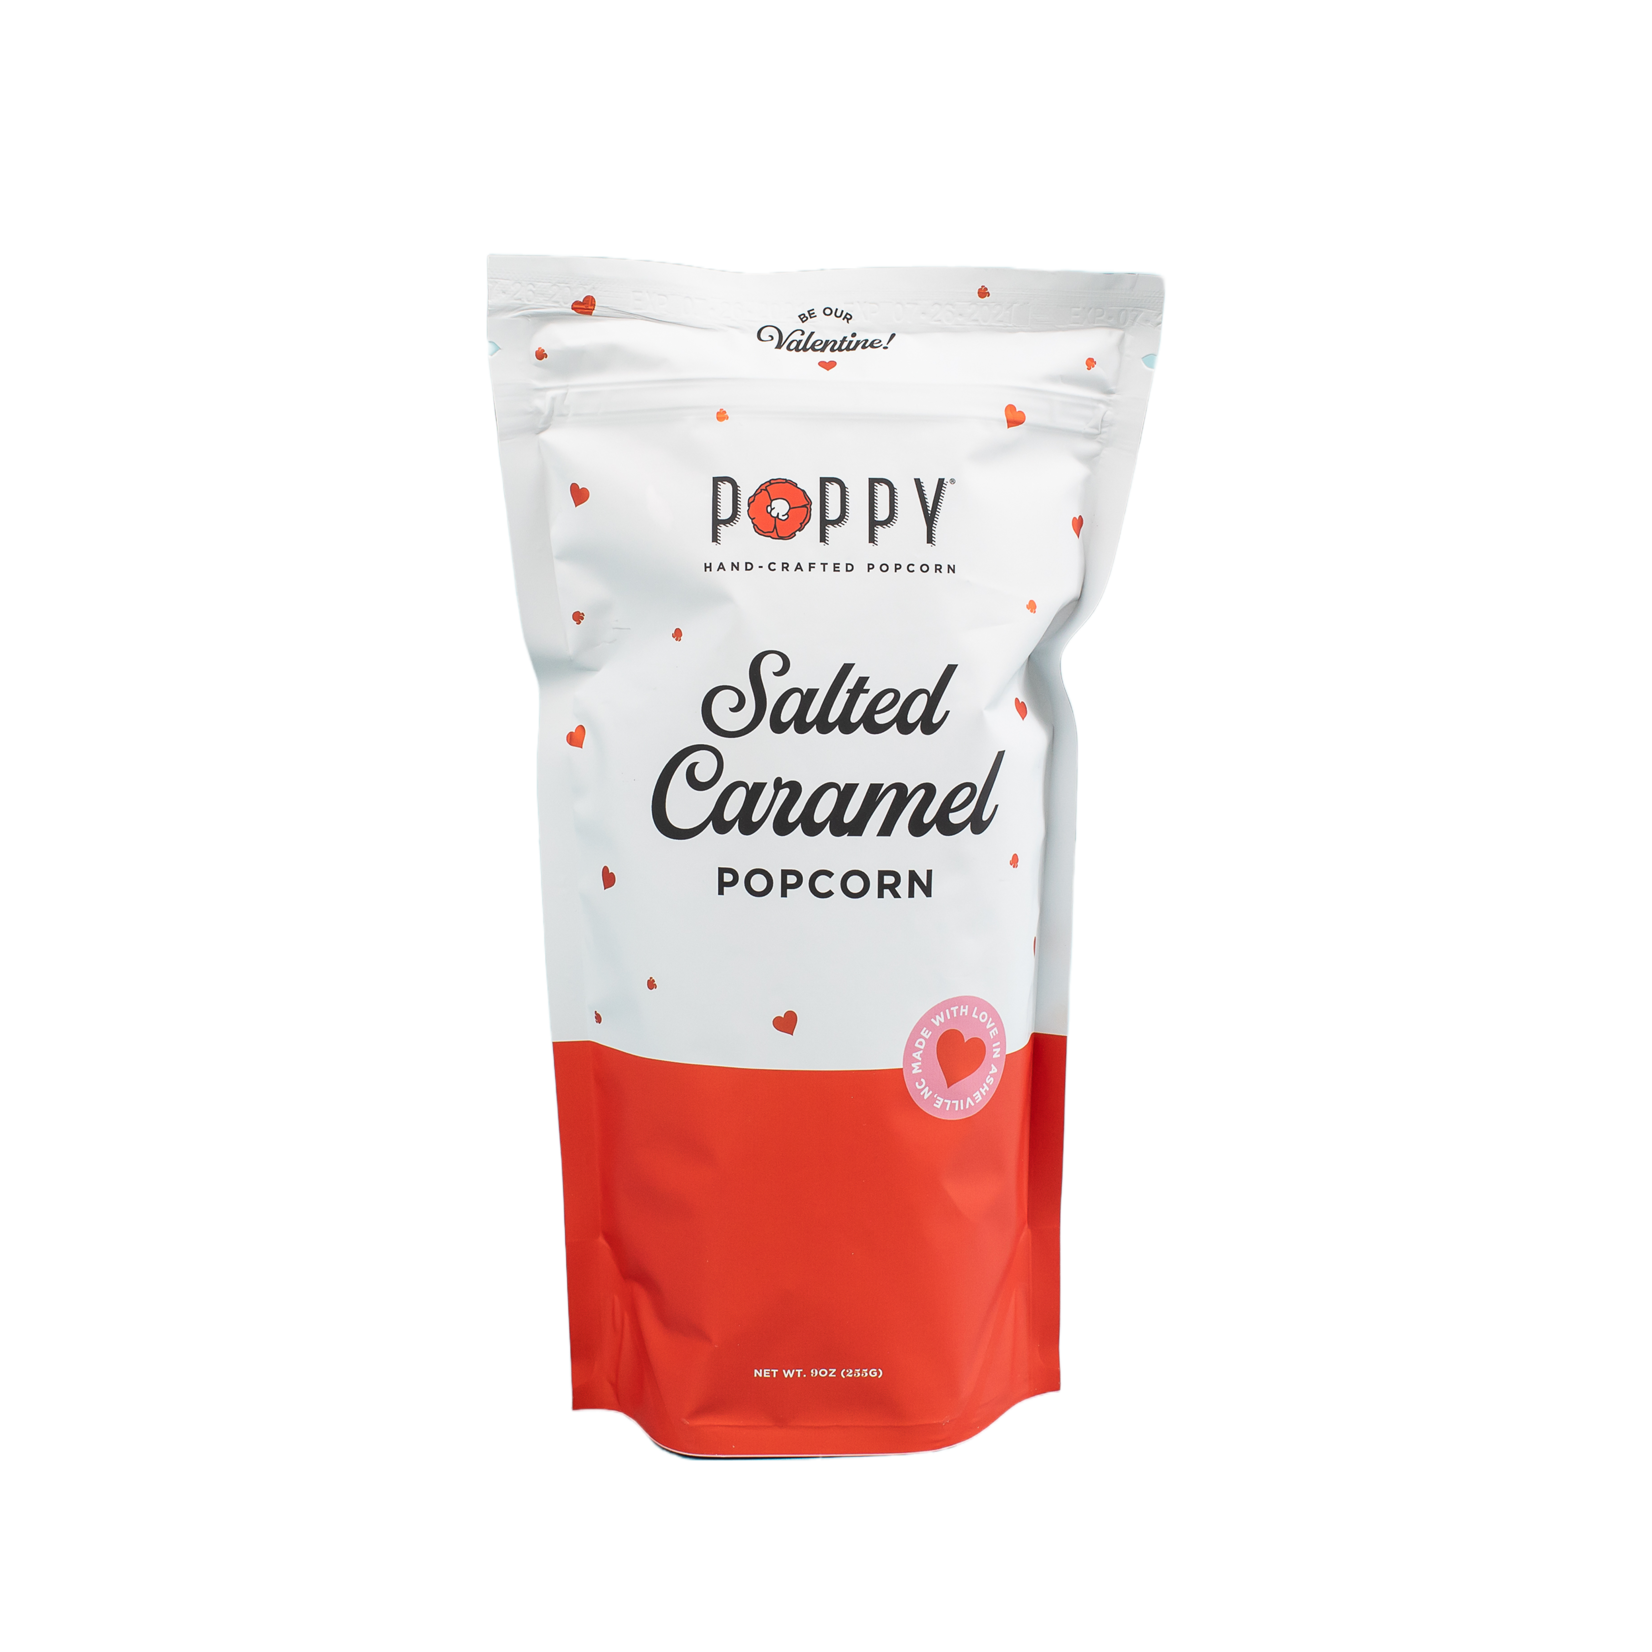 Poppy Handcrafted Popcorn Poppy Hand-crafted Popcorn Market Bag